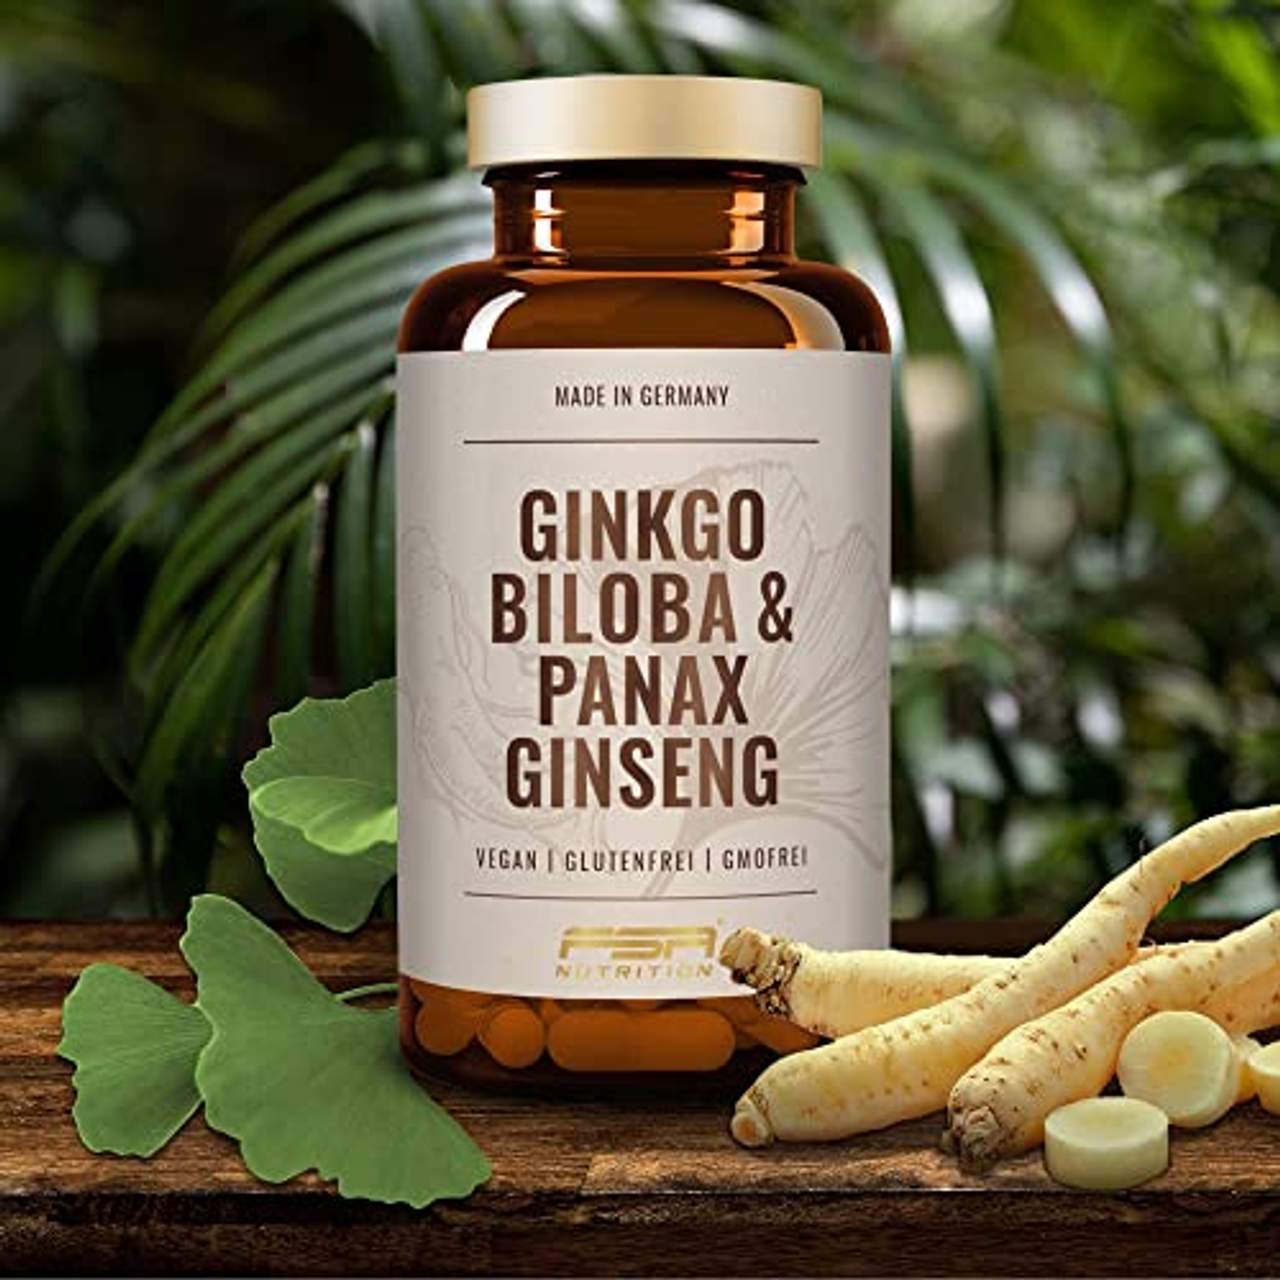 Ginkgo Biloba & Panax Ginseng